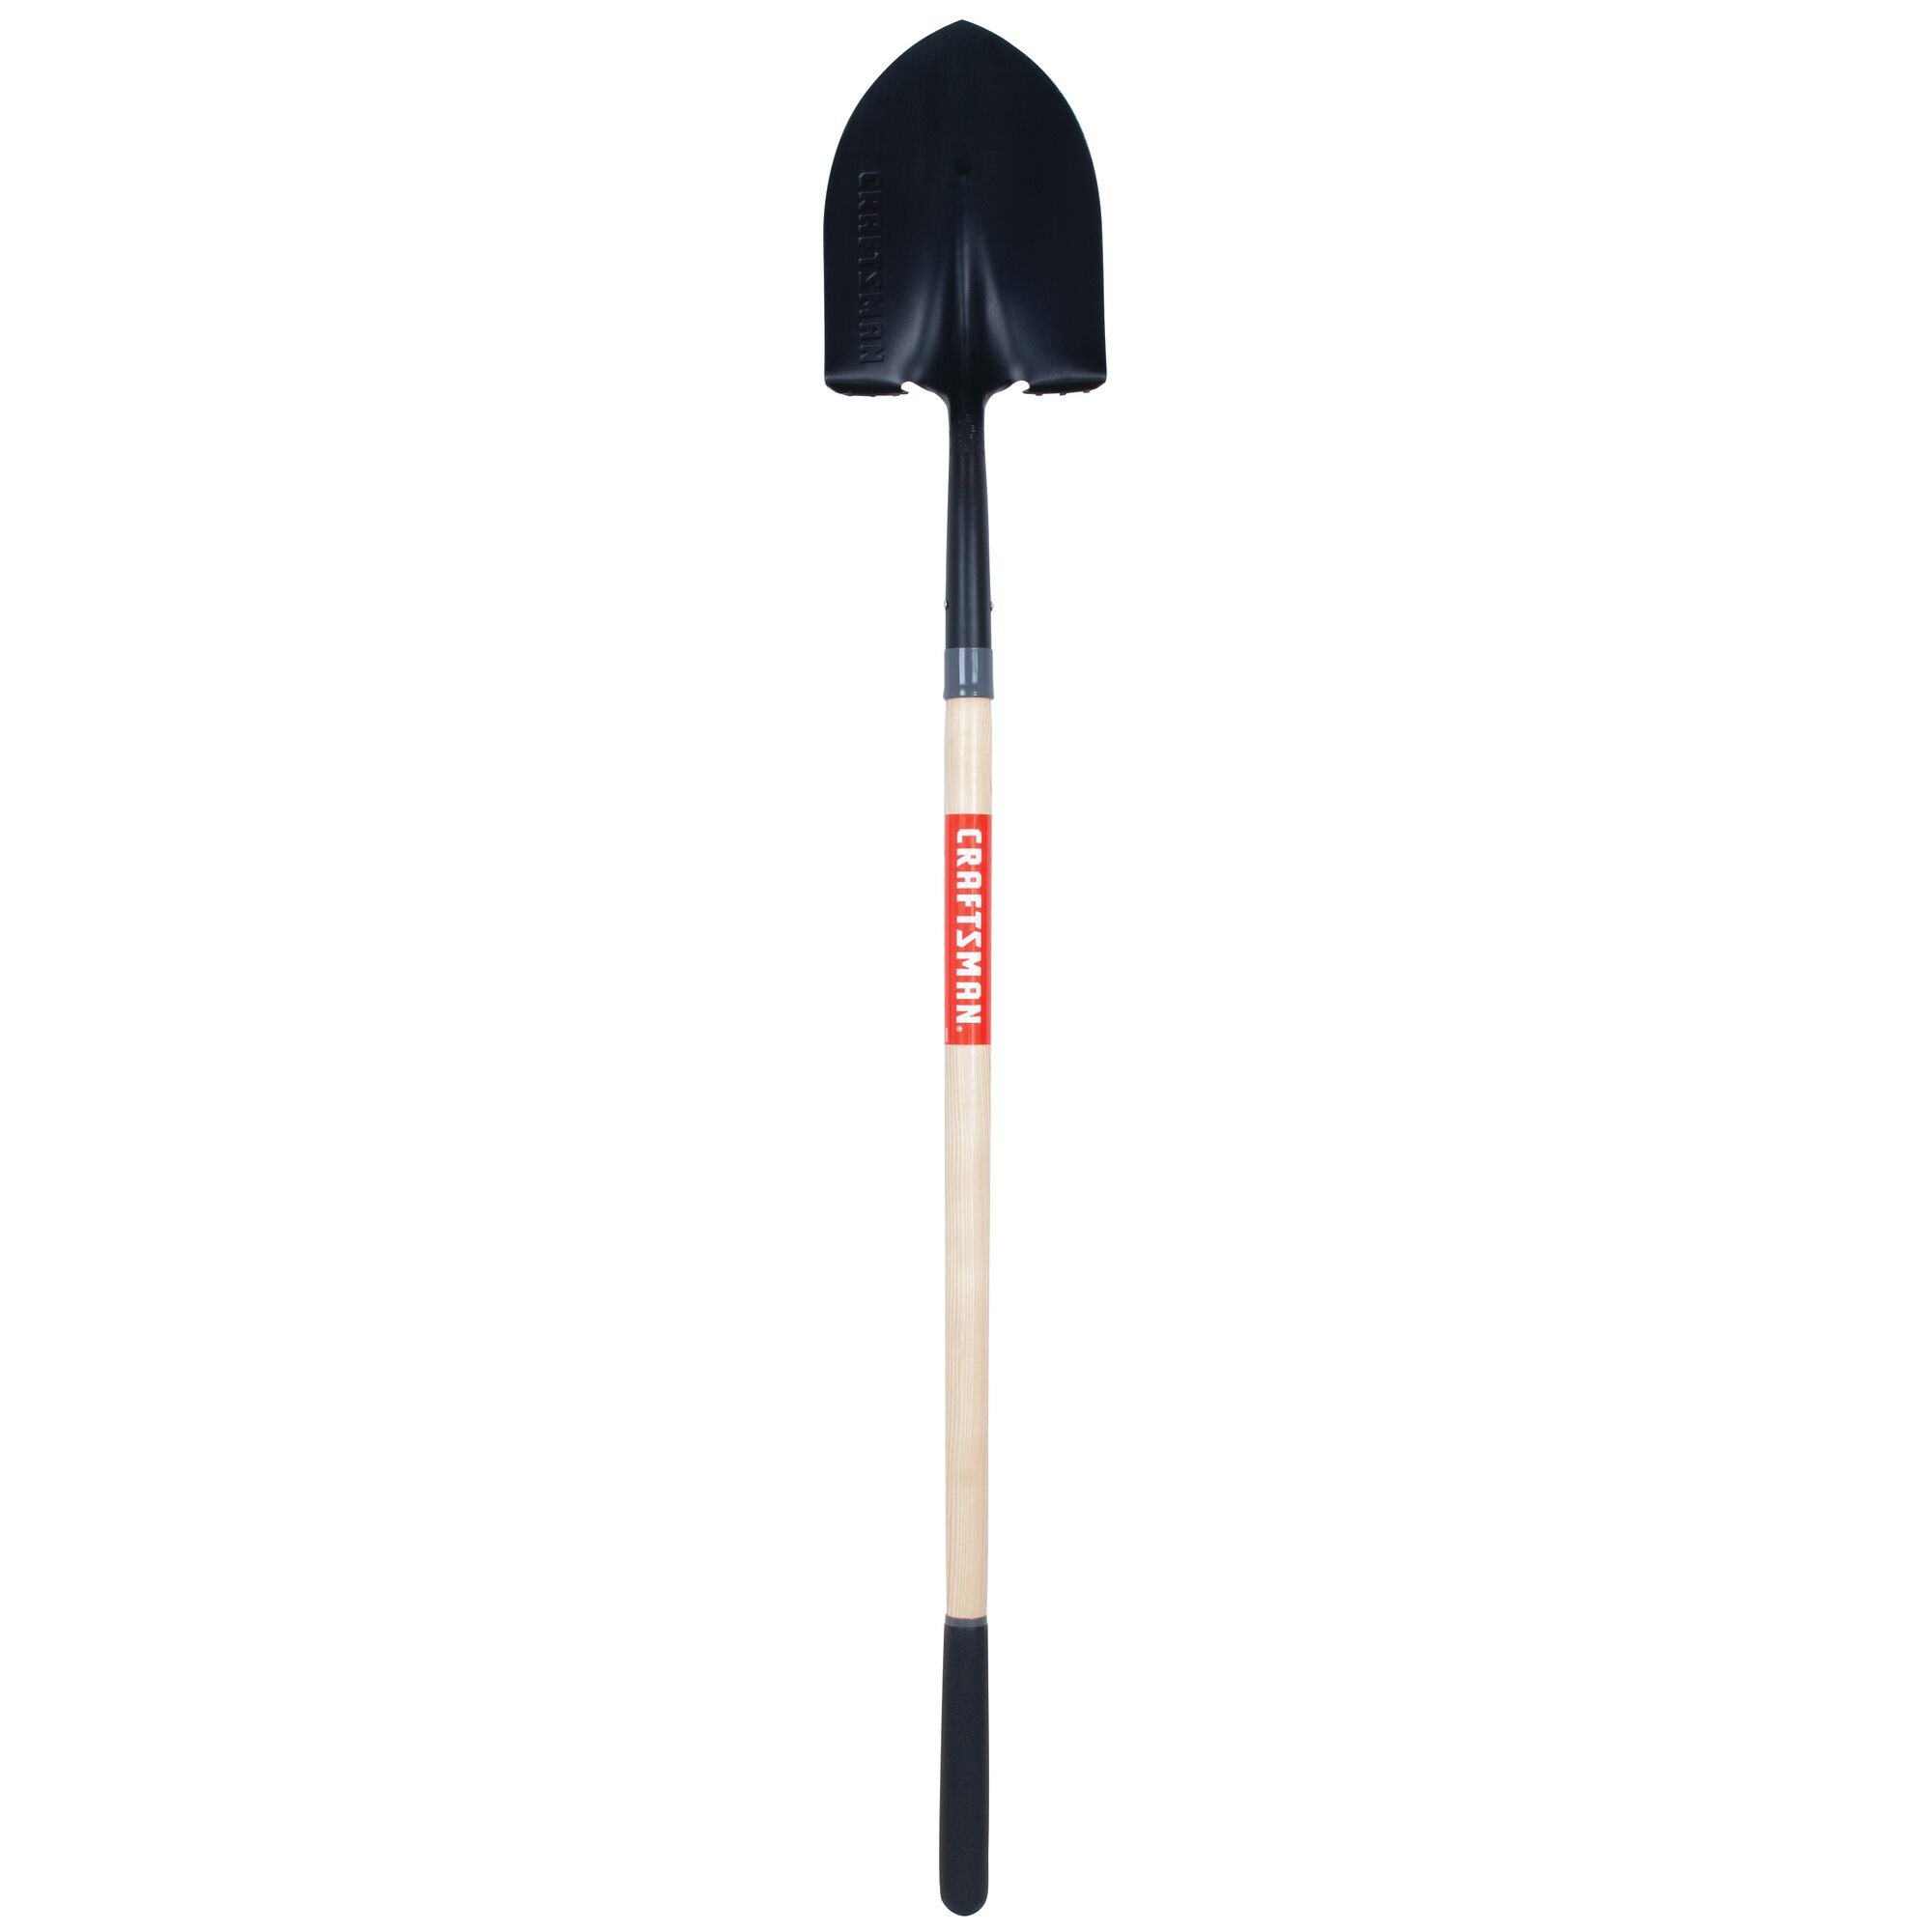 Profile of wood handle digging shovel.